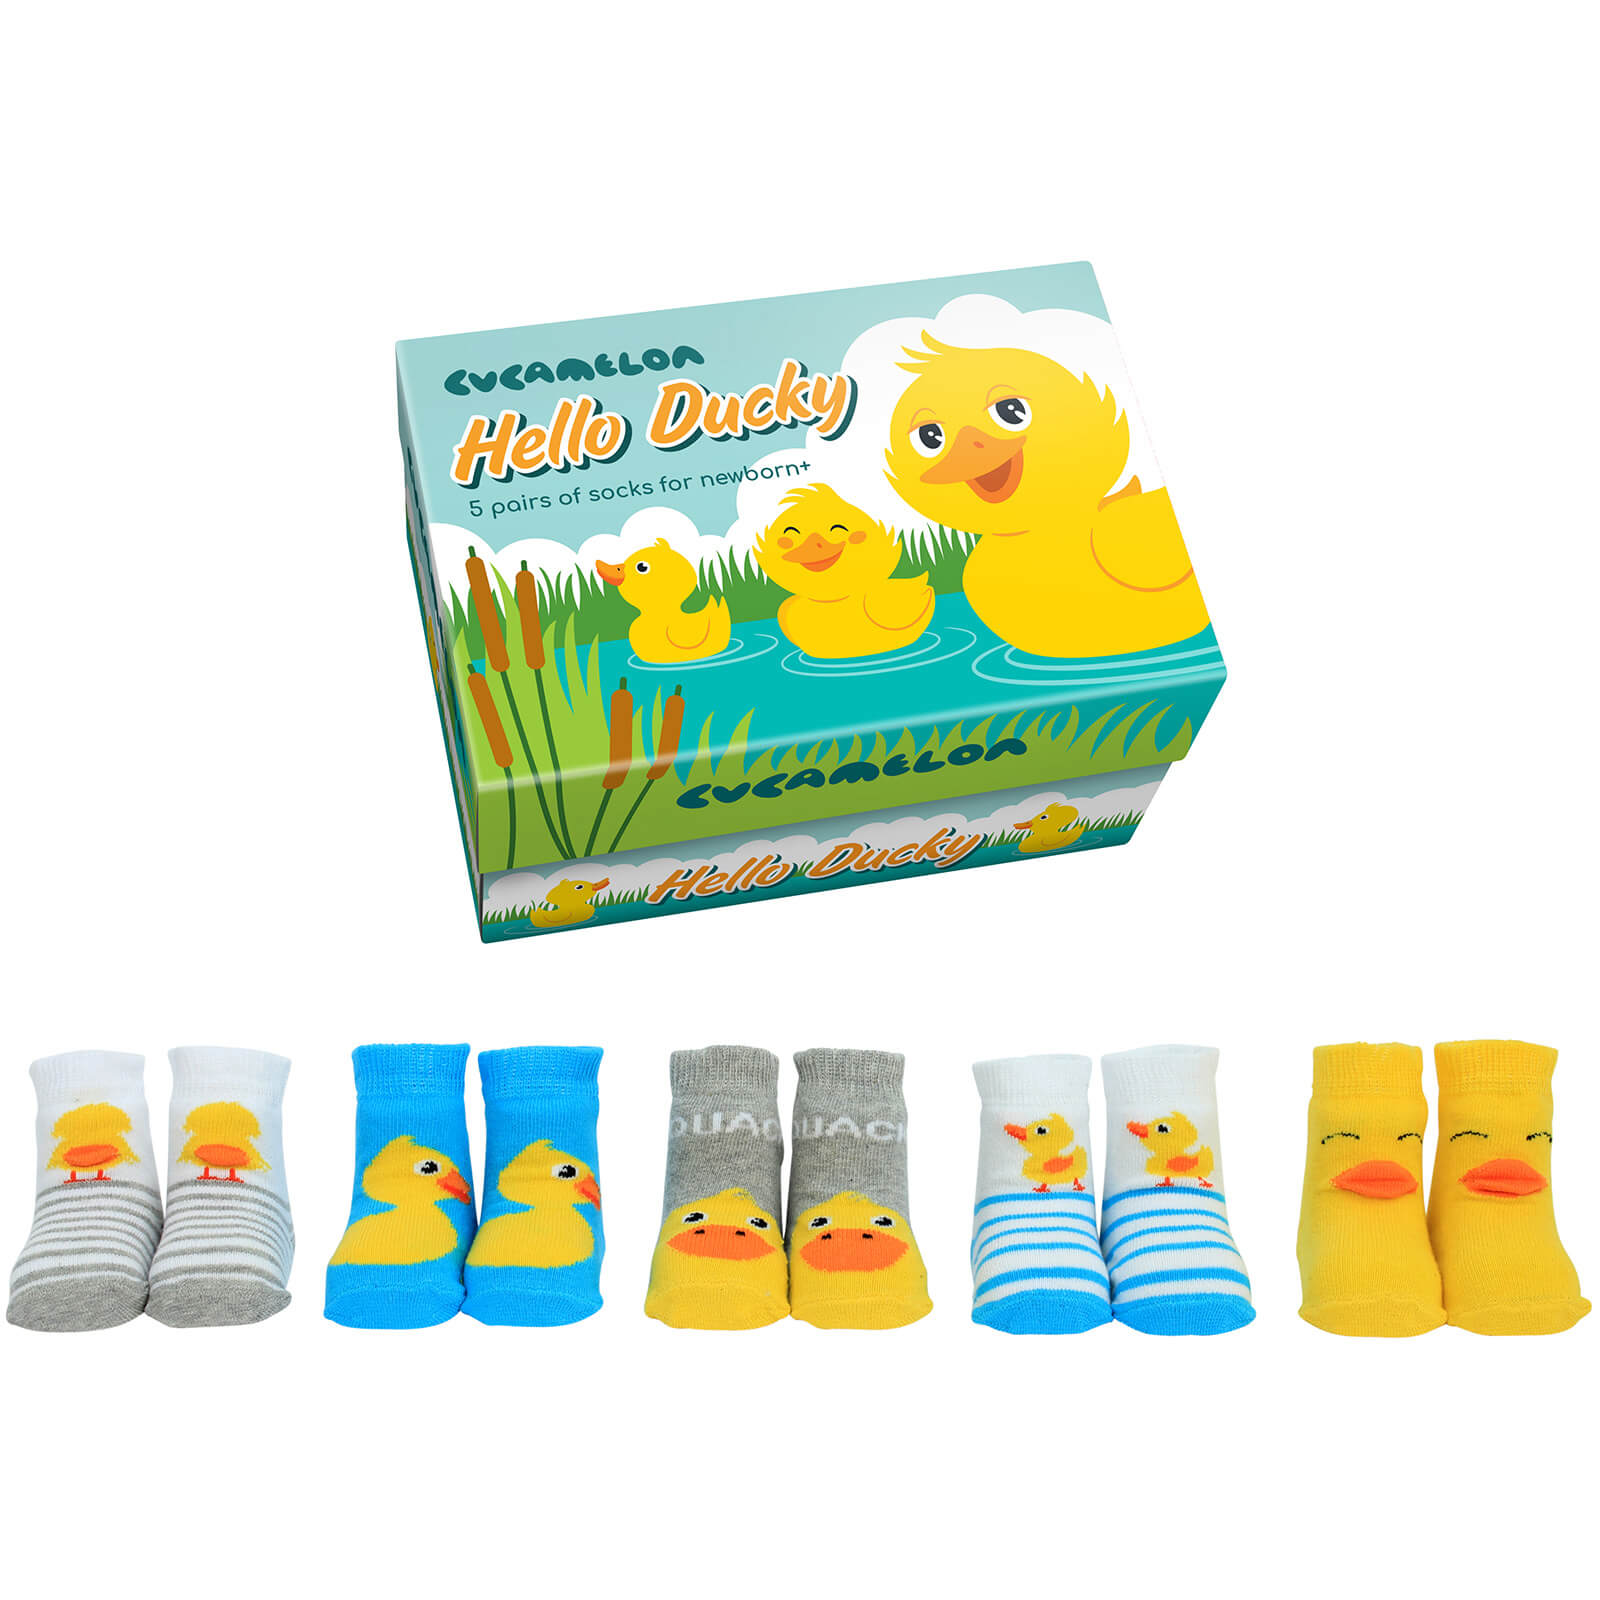 Image of Socks Gift Box Newborn Hello Ducky